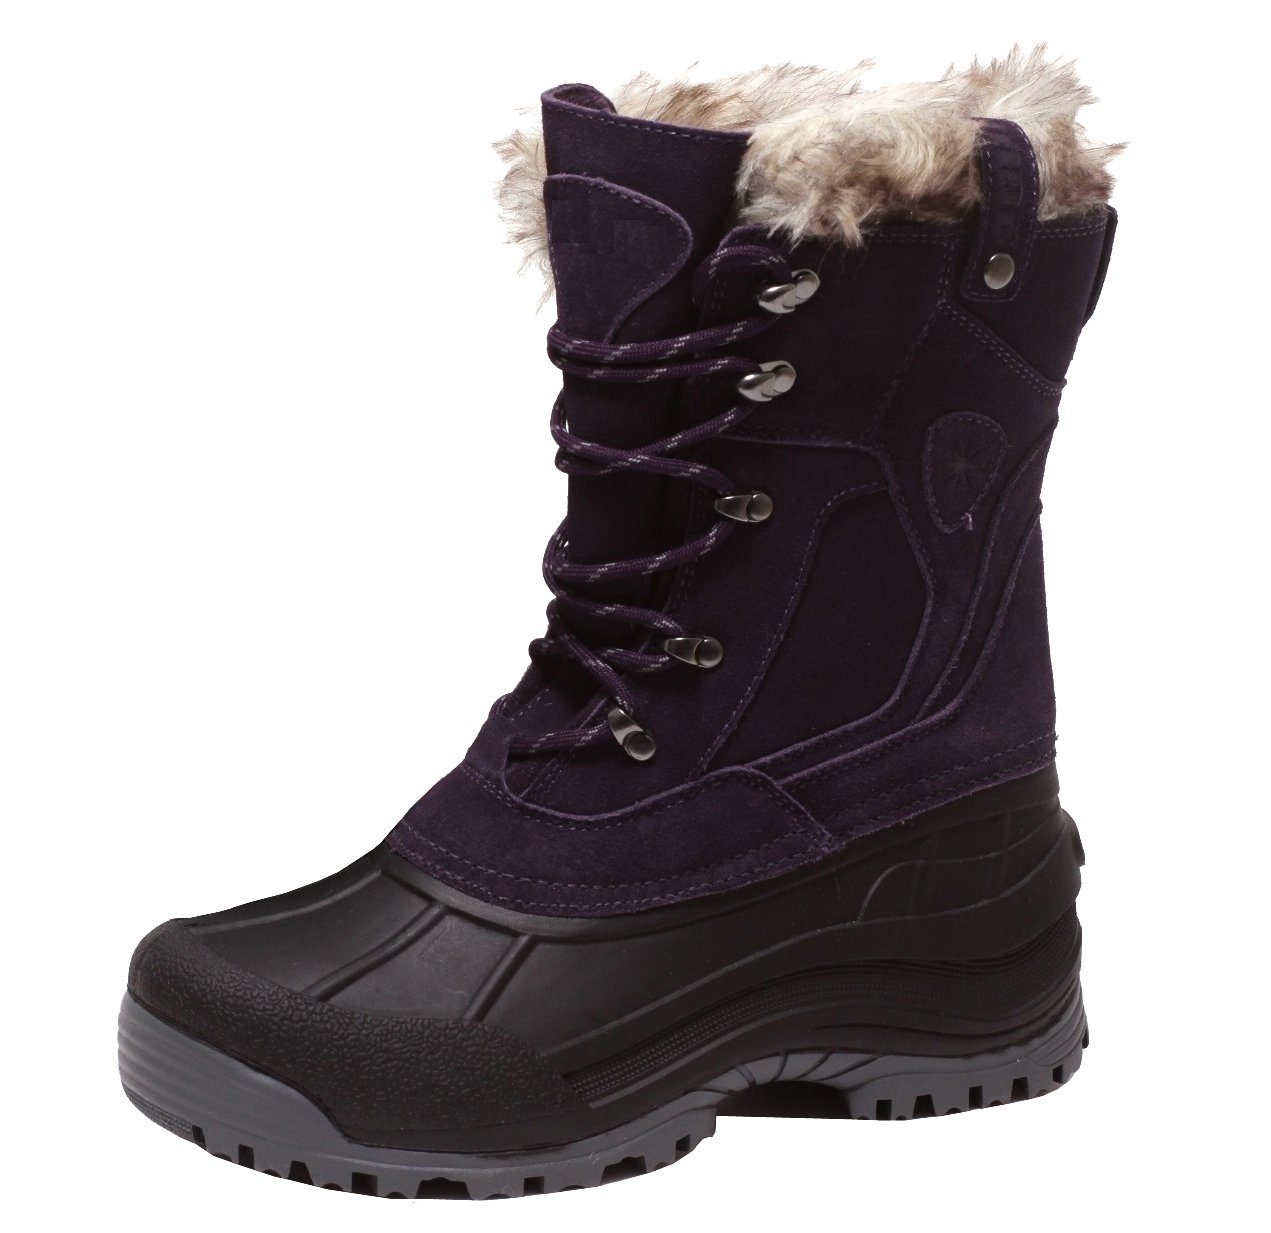 Zapato Winterstiefel Echt Leder Winterstiefel Thermo Stiefel Winter  Snowboots Canadian Boots Lammfell online kaufen | OTTO